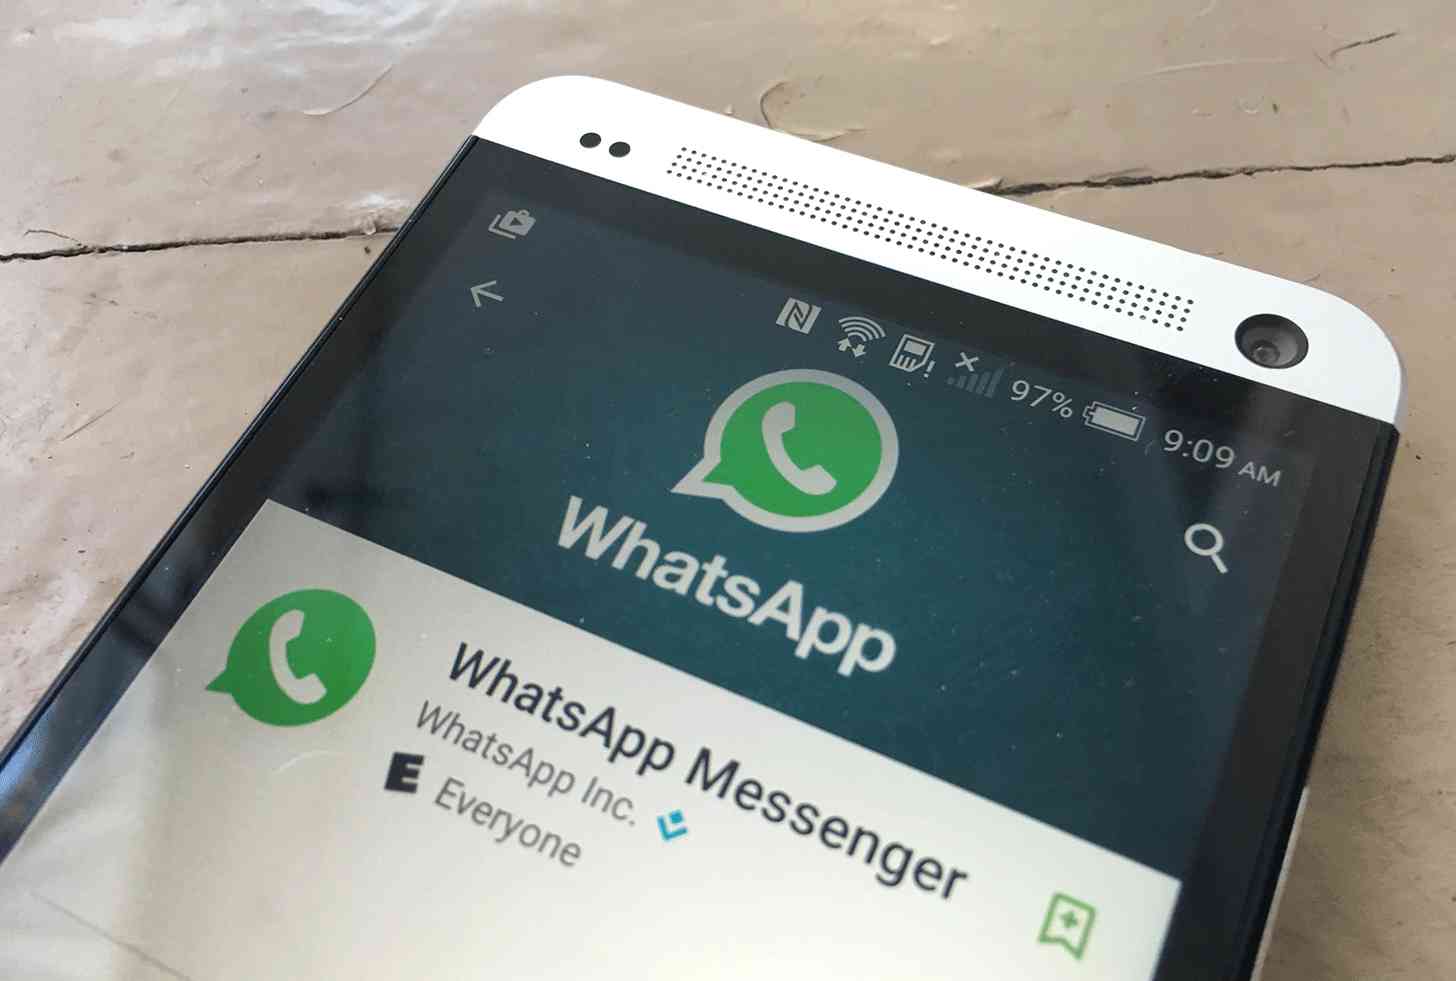 WhatsApp Android app